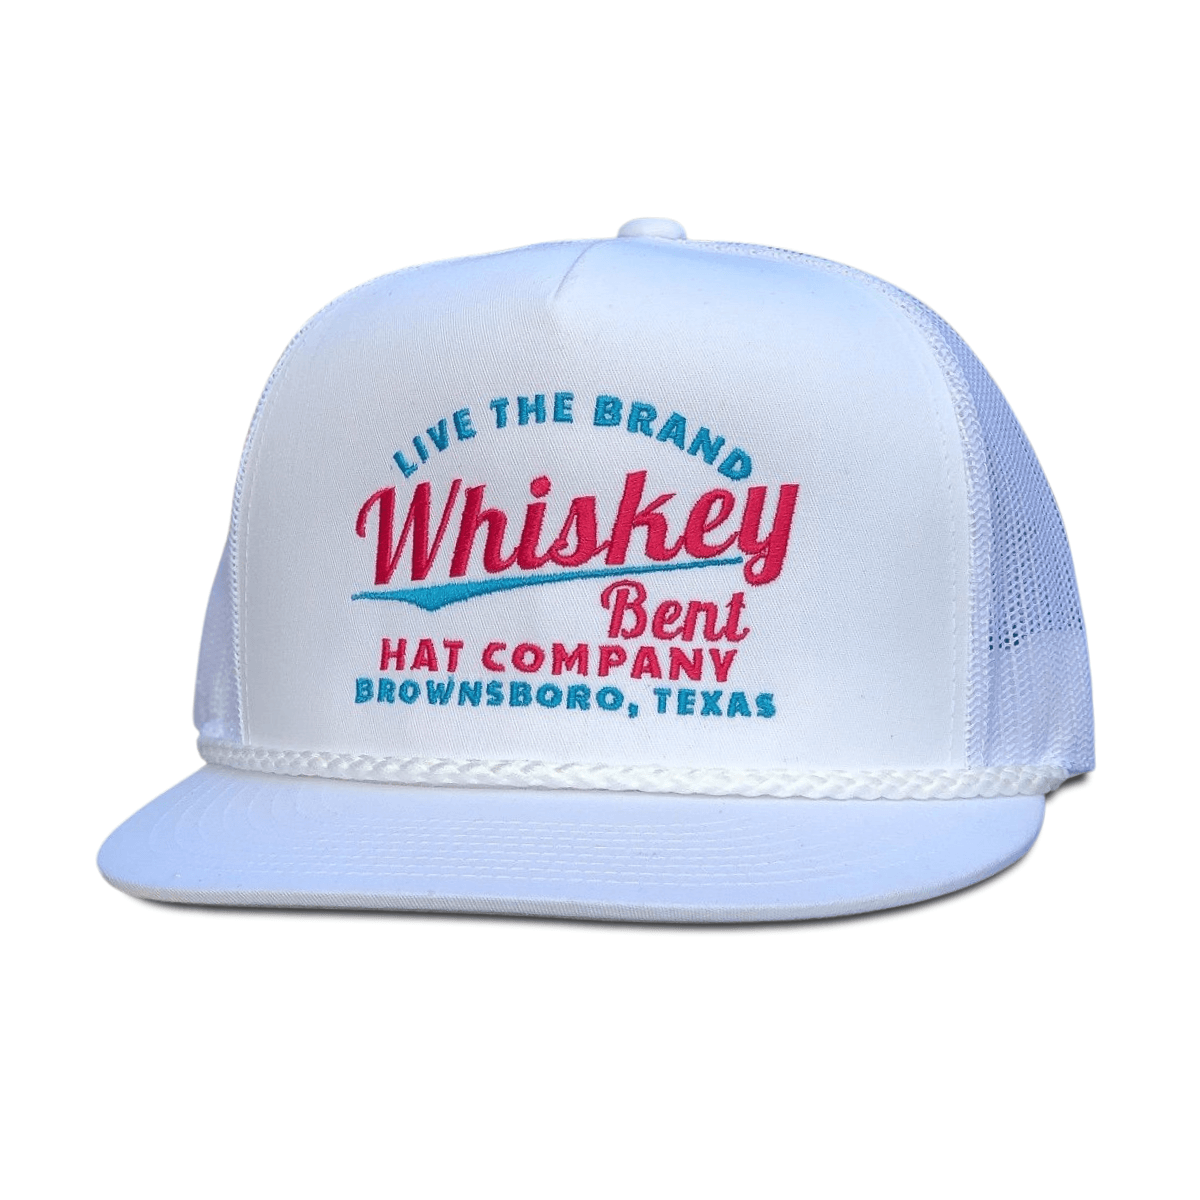 whiskey bent hat